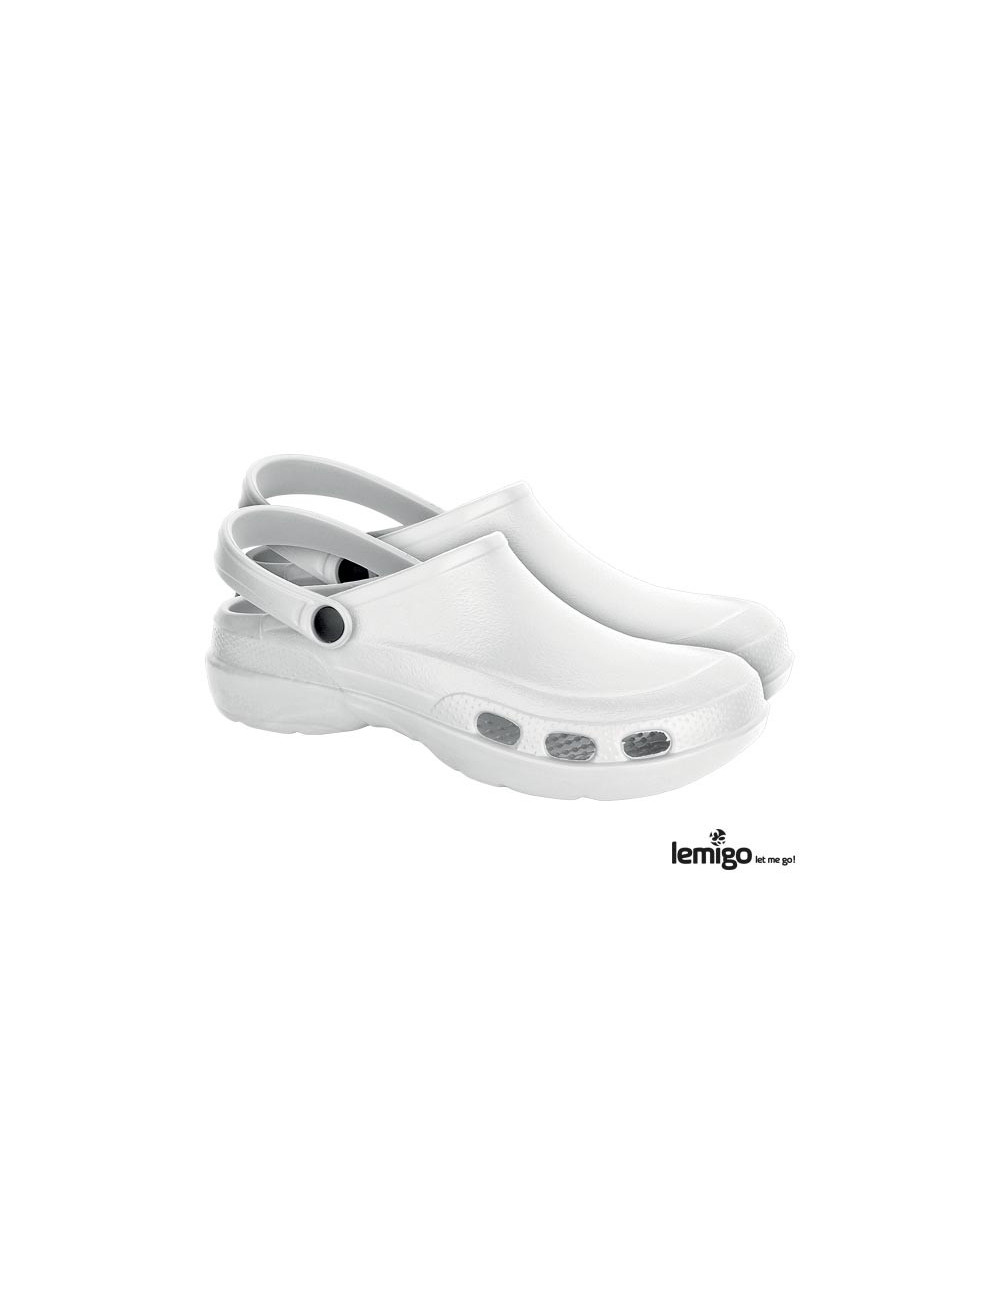 Bldoctor slippers in white Lemigo